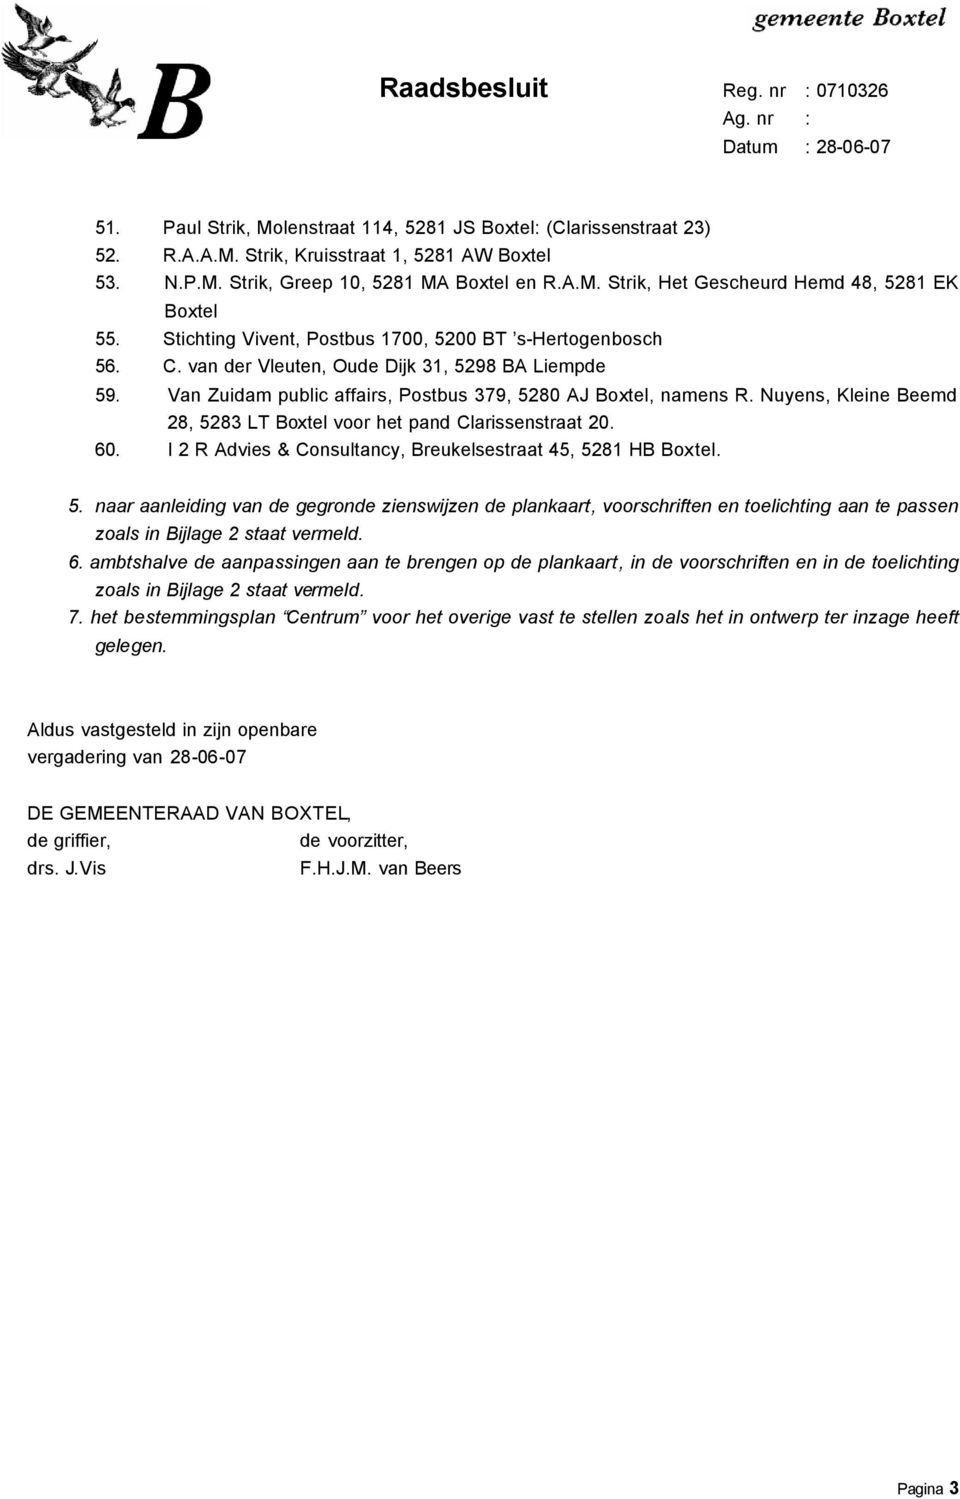 Van Zuidam public affairs, Postbus 379, 5280 AJ Boxtel, namens R. Nuyens, Kleine Beemd 28, 5283 LT Boxtel voor het pand Clarissenstraat 20. 60.